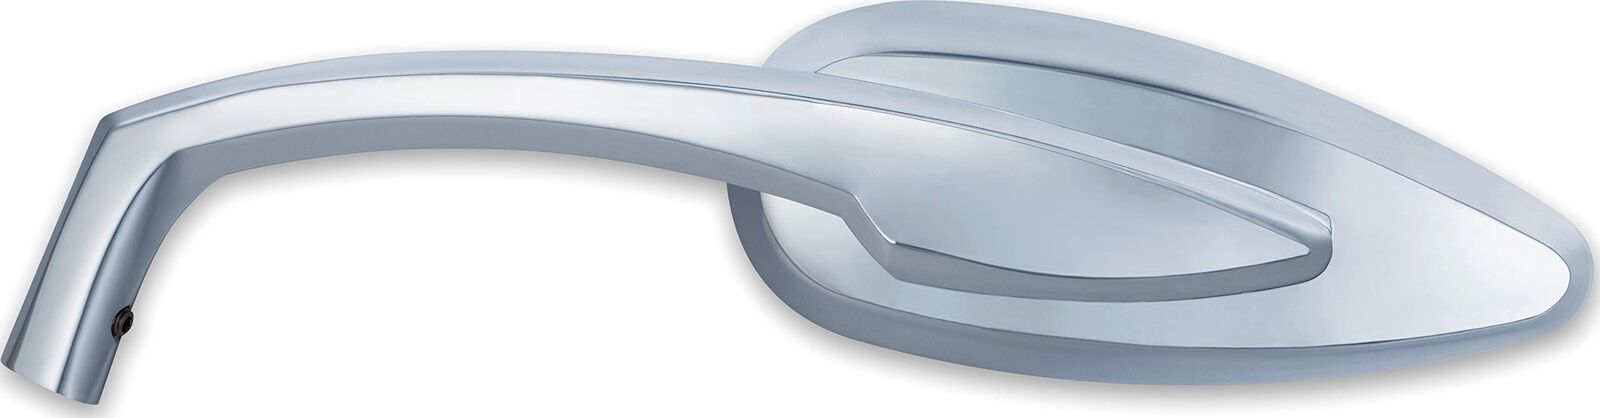 Kuryakyn Chrome Convex Streamline Teardrop Mirrors For Harley Or Metric (Pr)